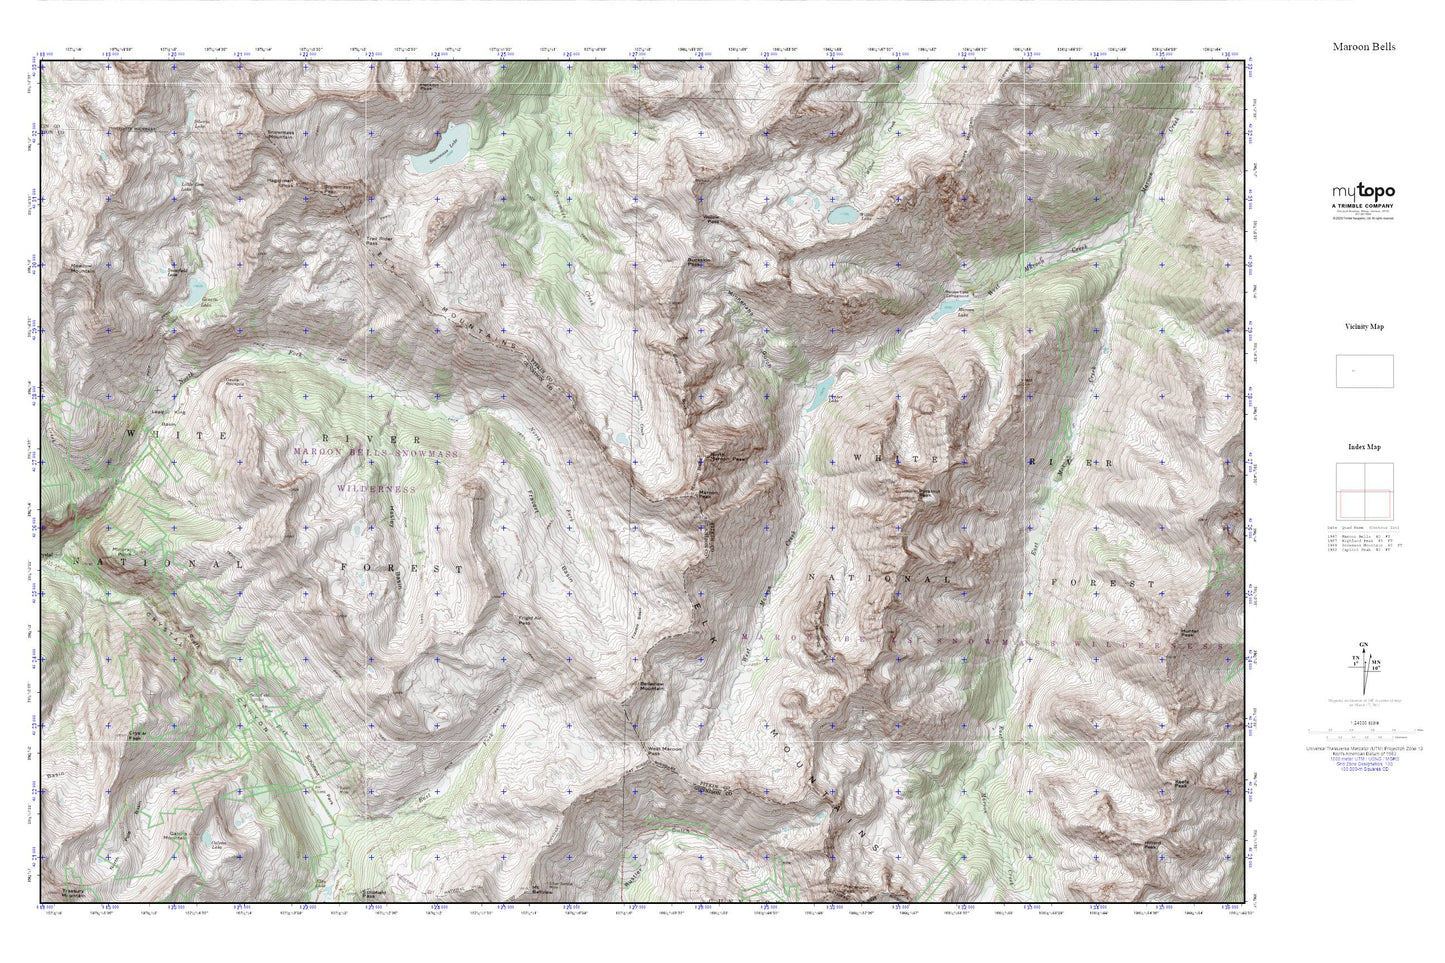 Aspen_CO_Four Pass Loop MyTopo Explorer Series Map Image